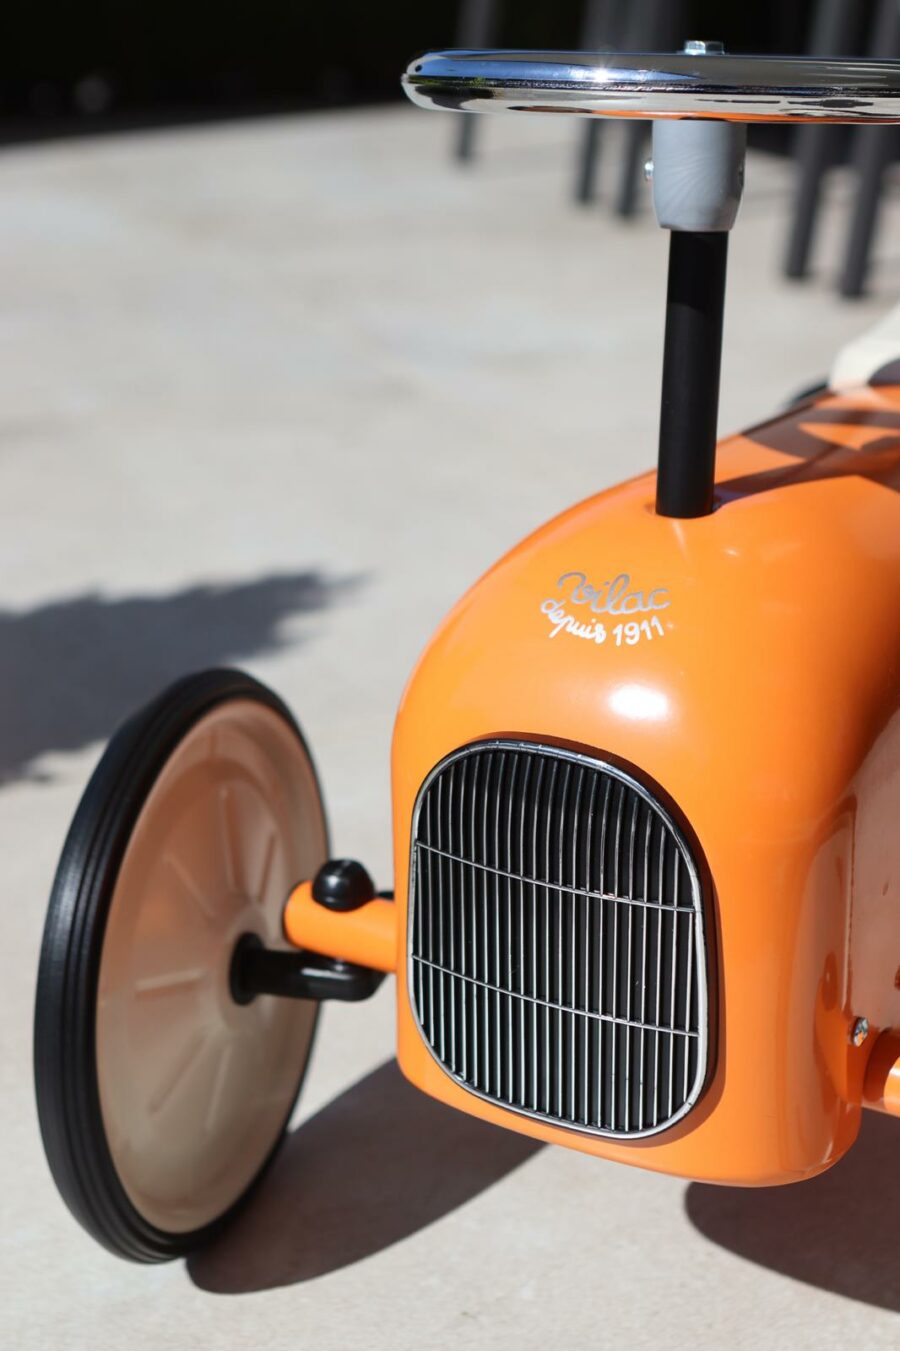 classic vintage ride on car in orange